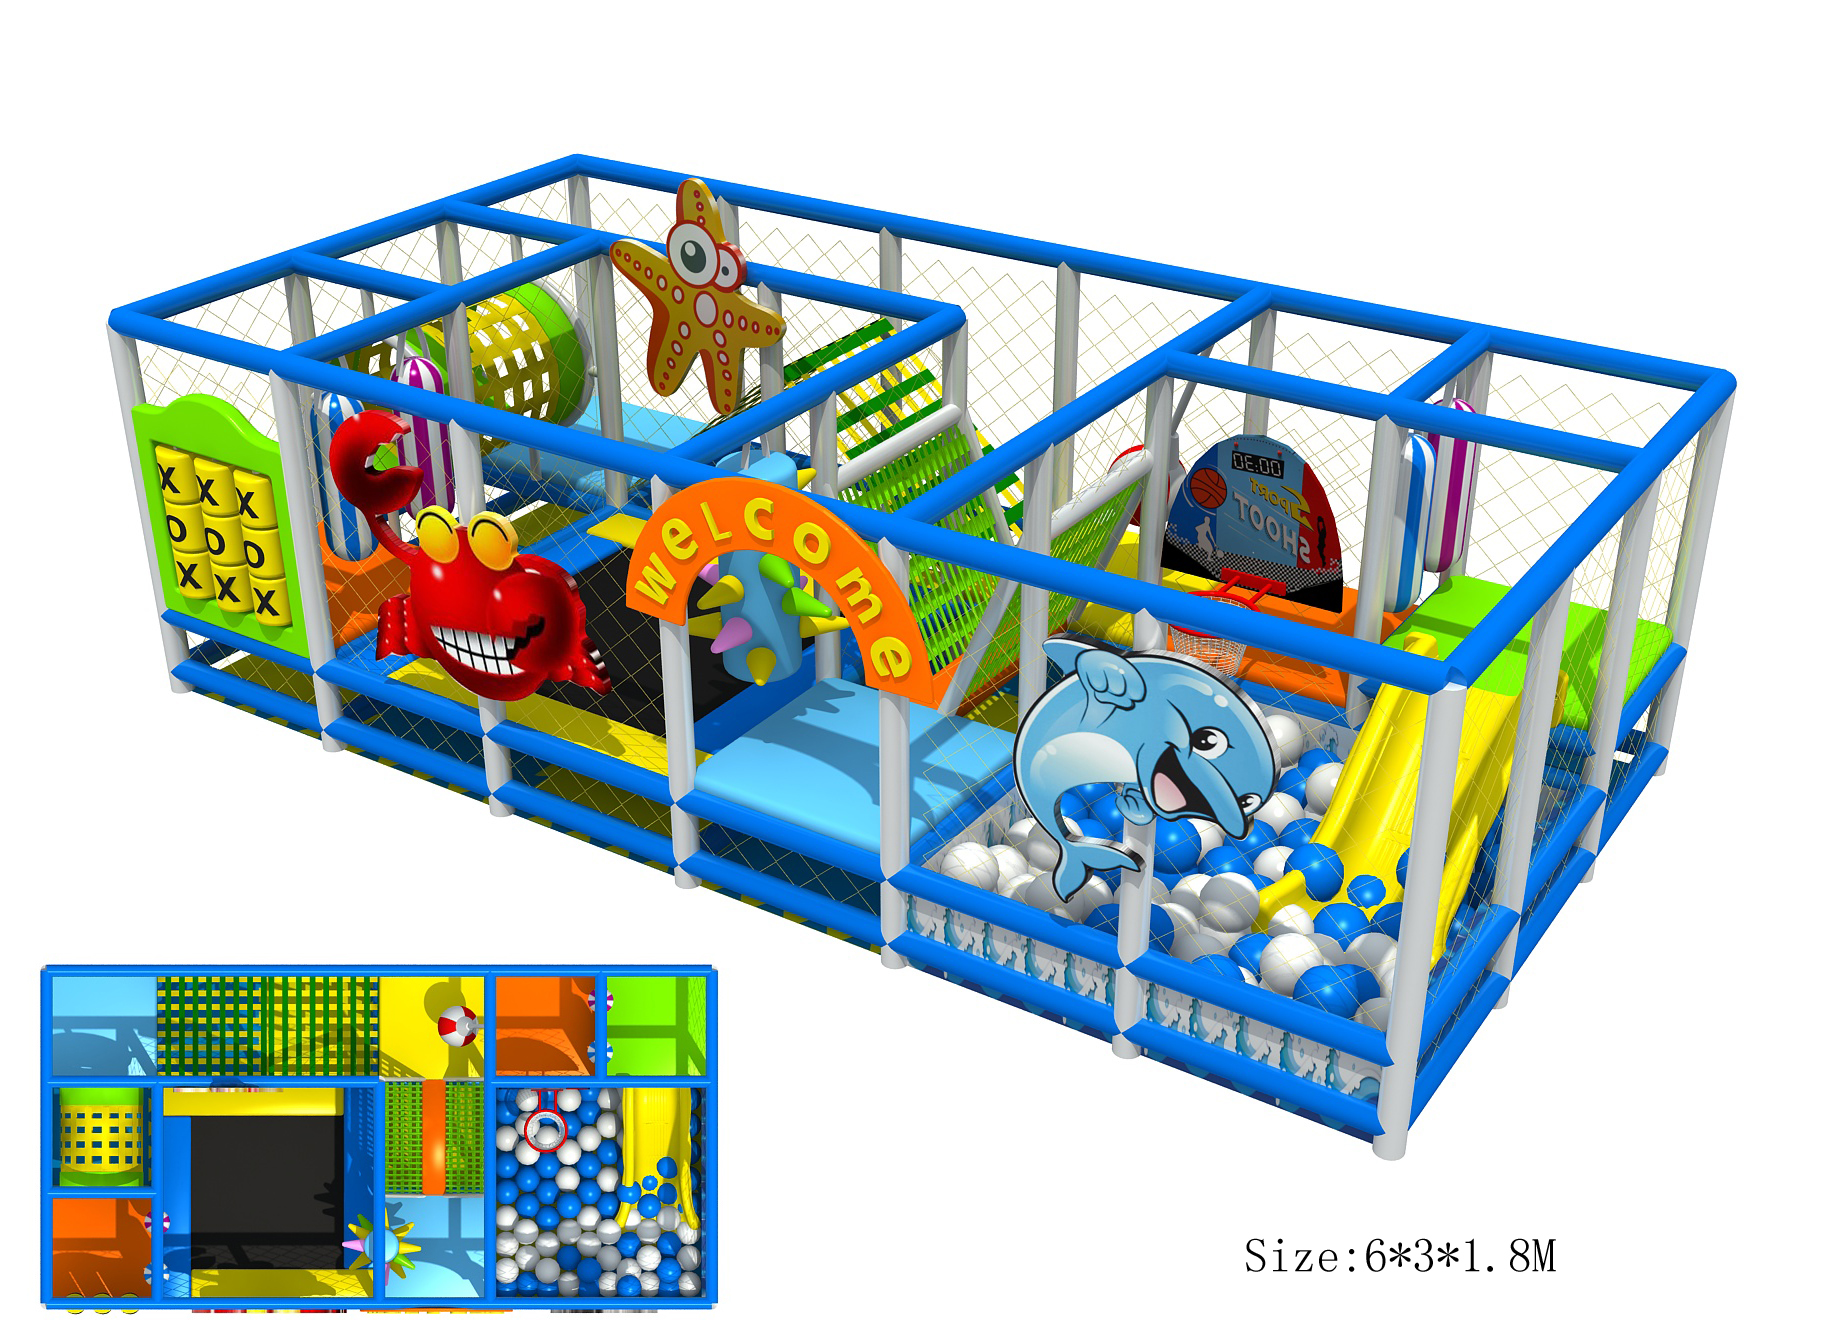 Best indoor playground for kids